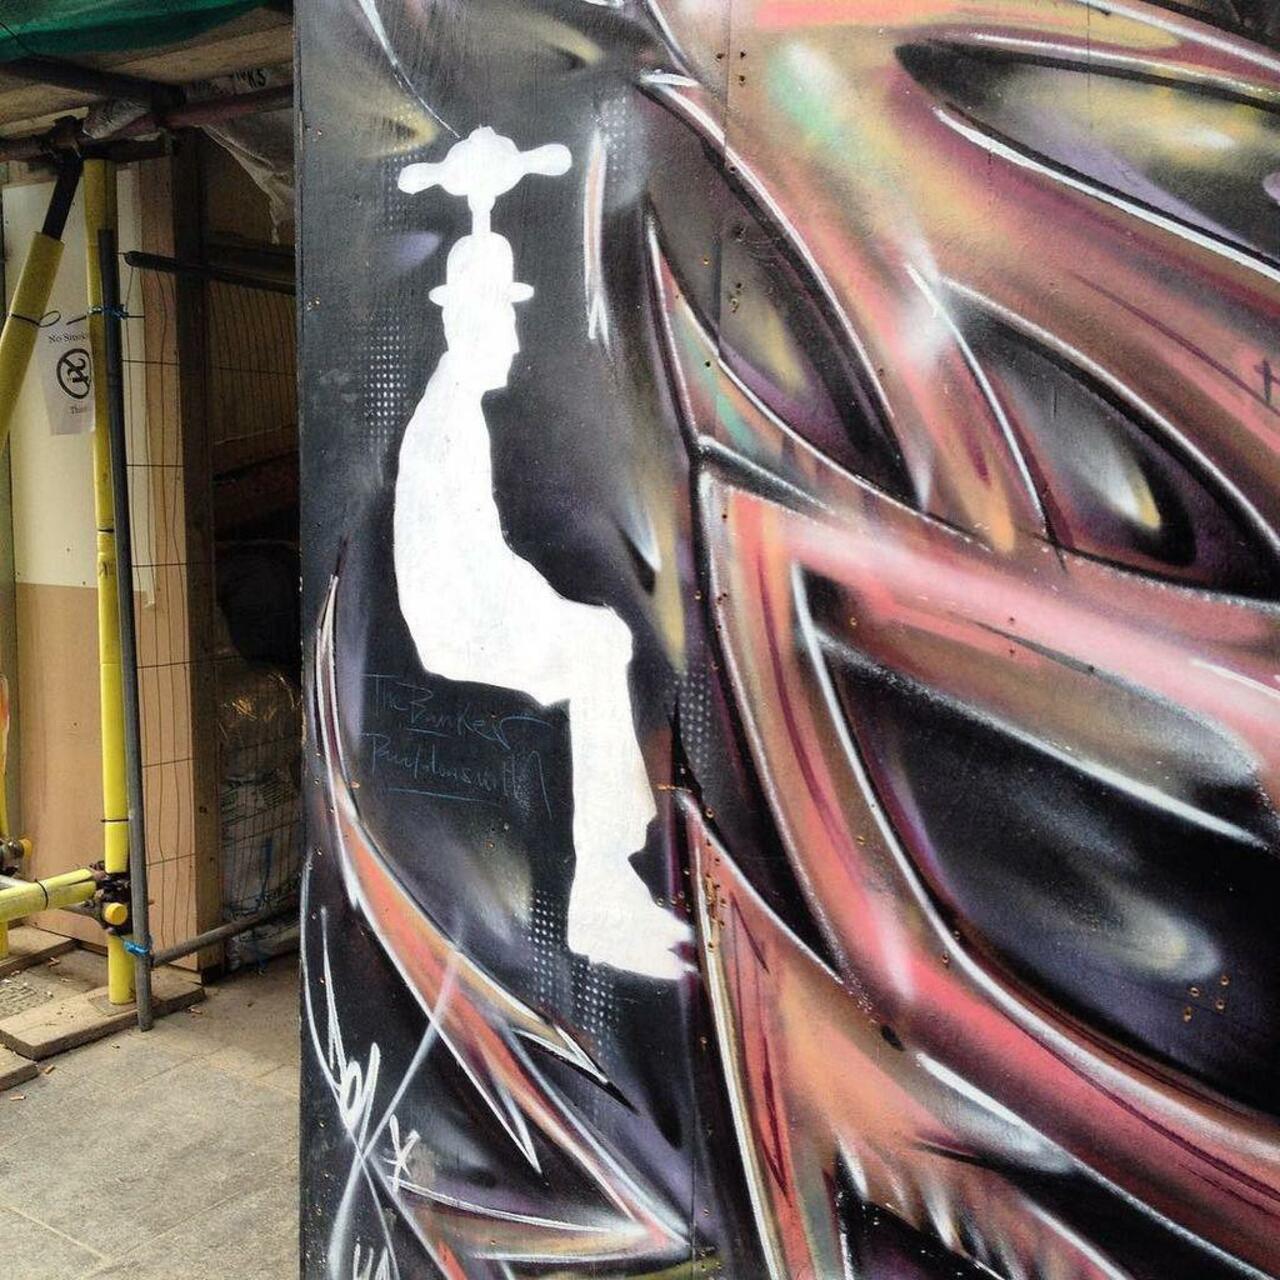 StArtEverywhere: #streetart #streetartlondon #graffiti #london #thisislondon by isadarko http://t.co/d2gESqIlJ6